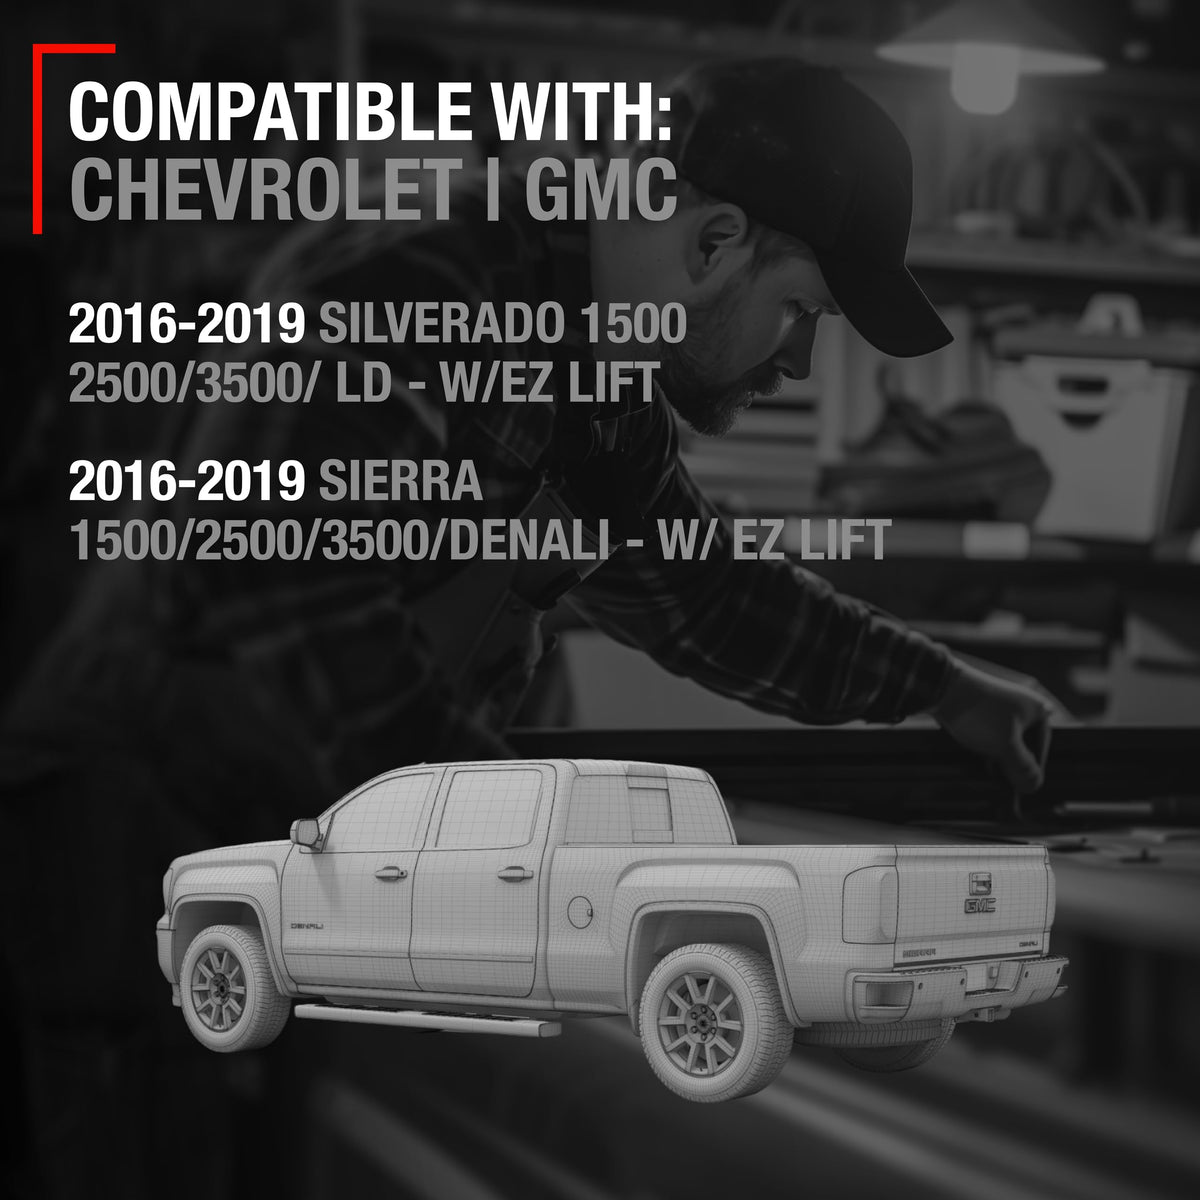 Rear View Backup Camera - Compatible with 2016-2019 Chevrolet Silverado; GMC Sierra Denali 1500 2500 3500 - Reverse Park Assist Camera Replacement - OEM 84062896, 590-111